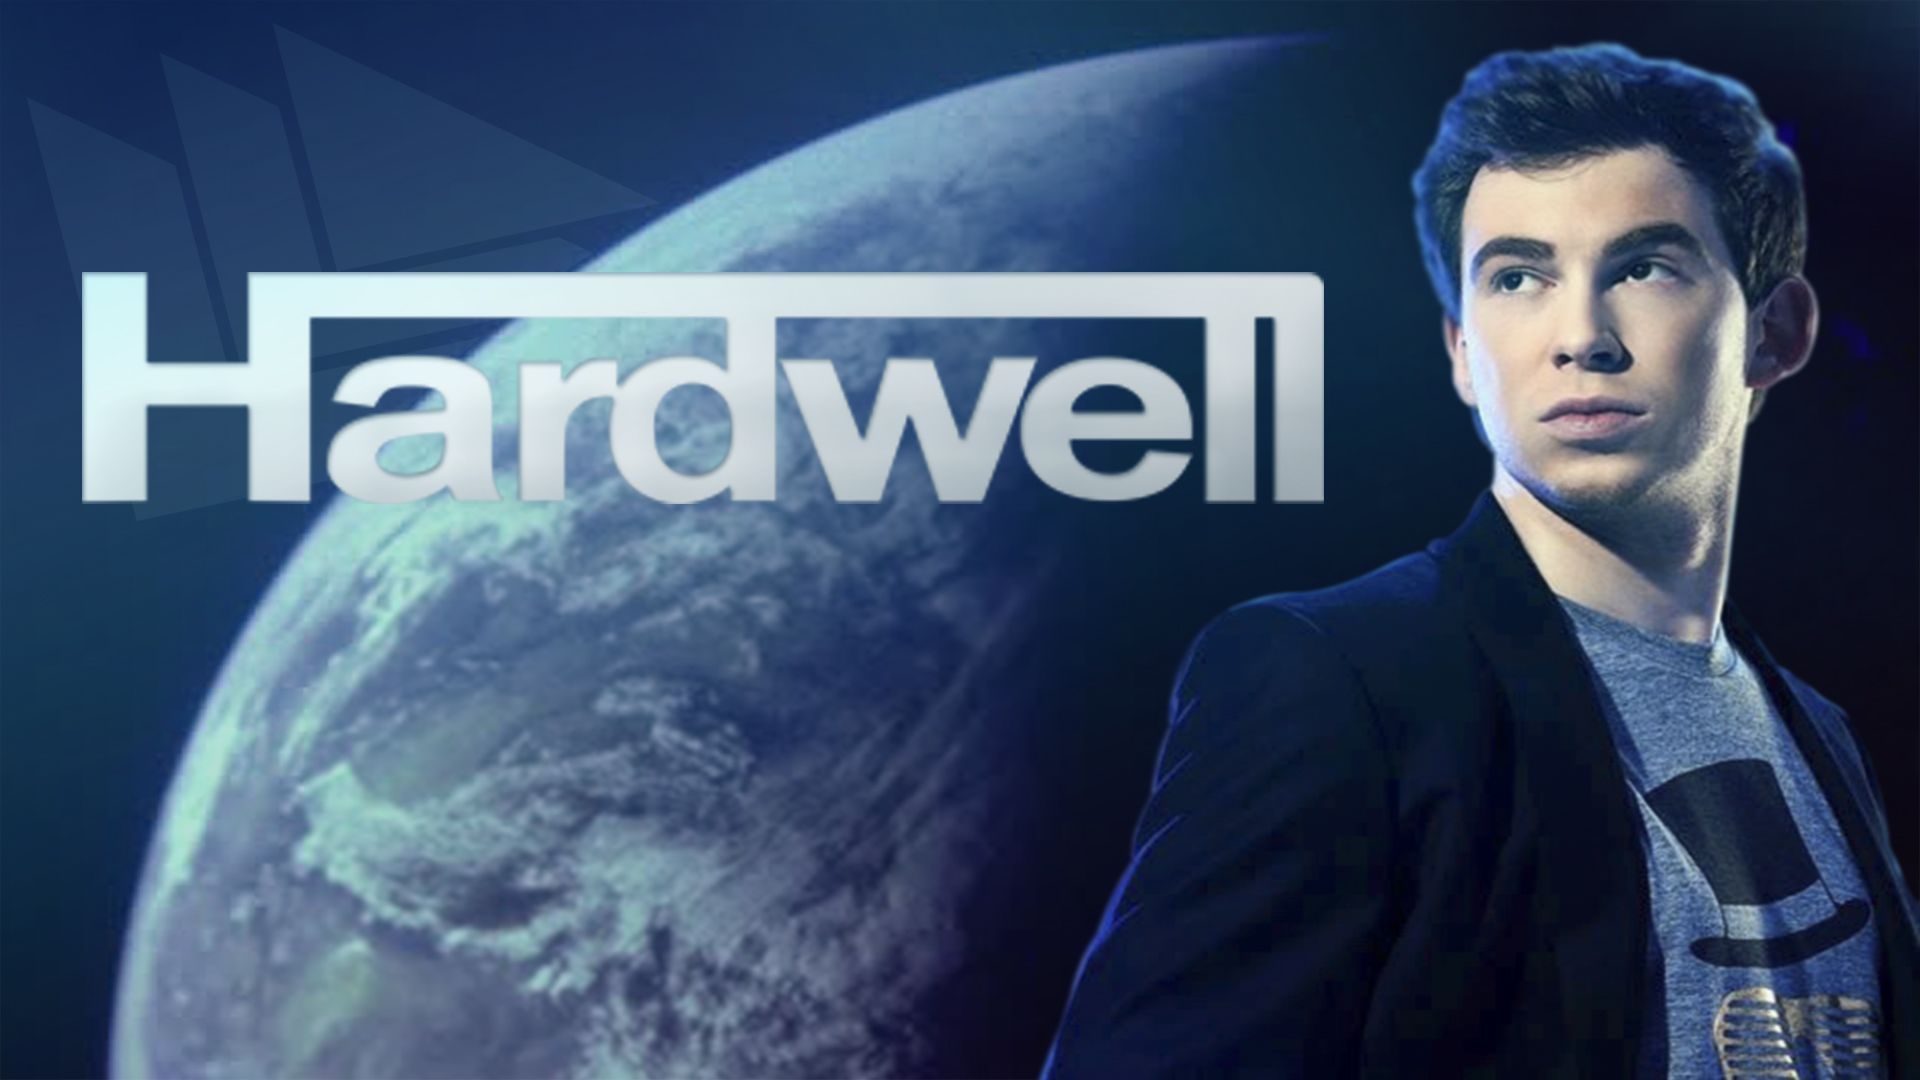 Call Me A Spaceman Hardwell Album Cover - HD Wallpaper 